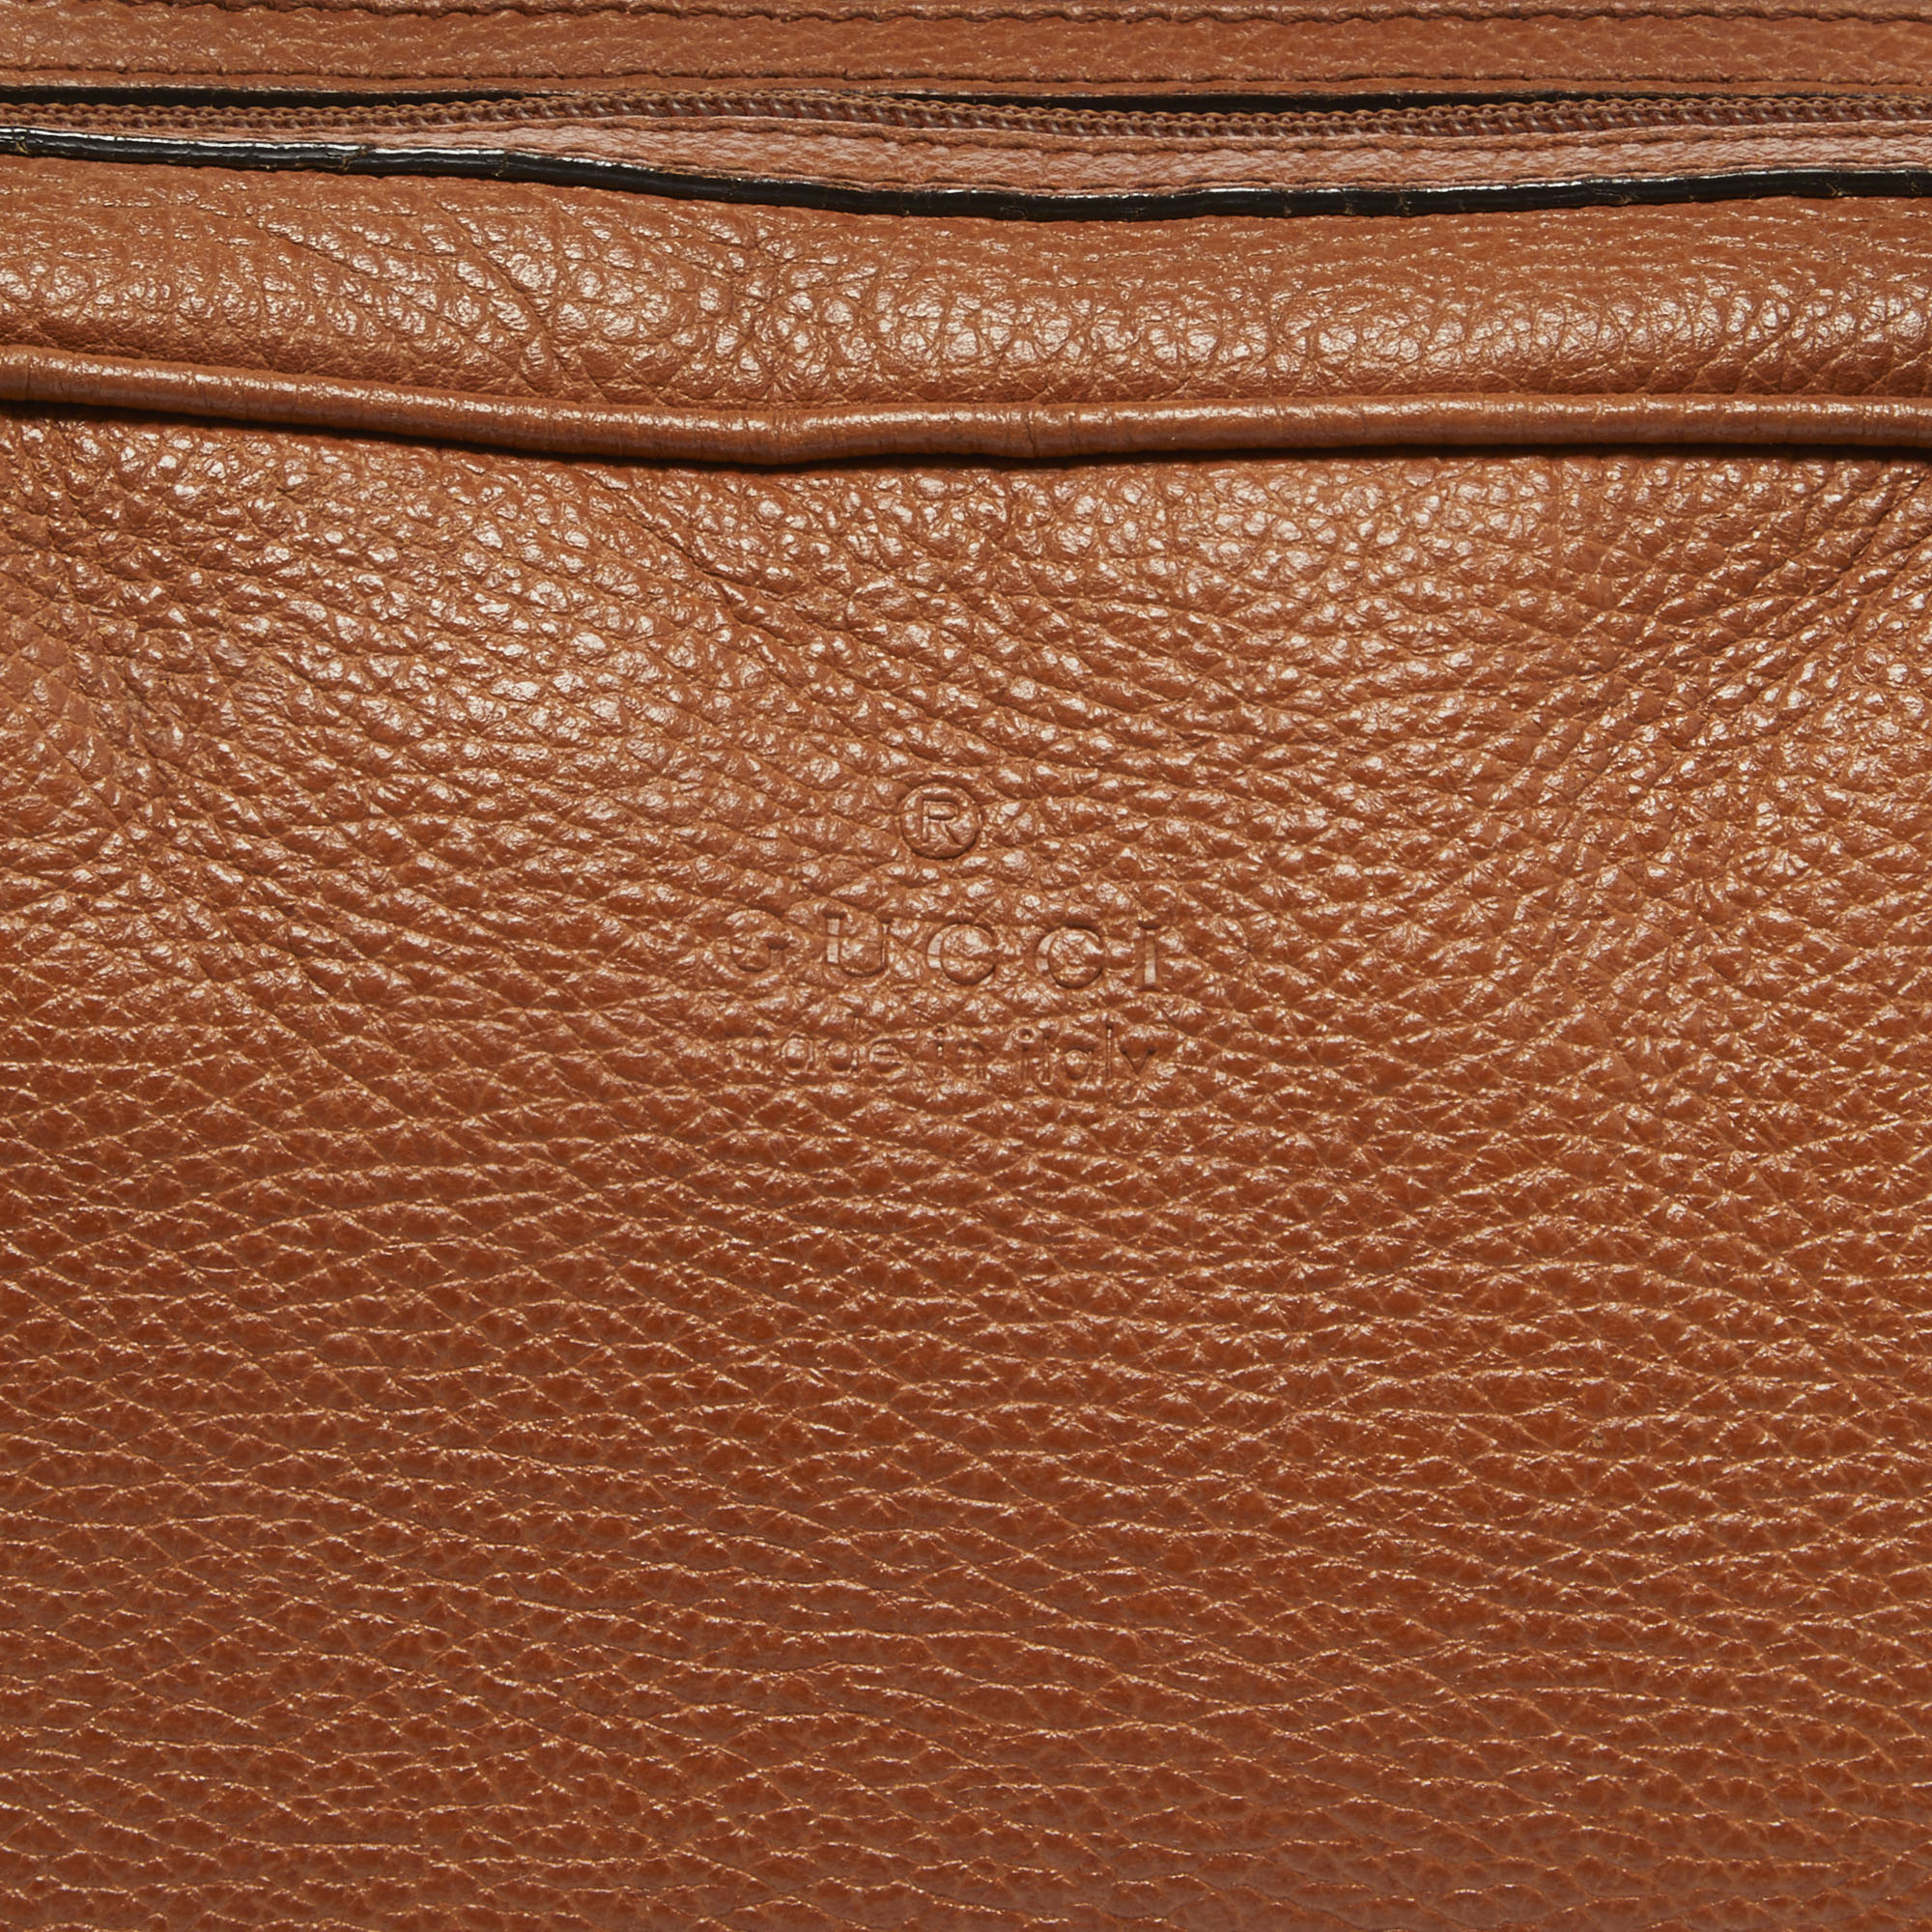 Gucci Brown Leather Princy Boston Bag